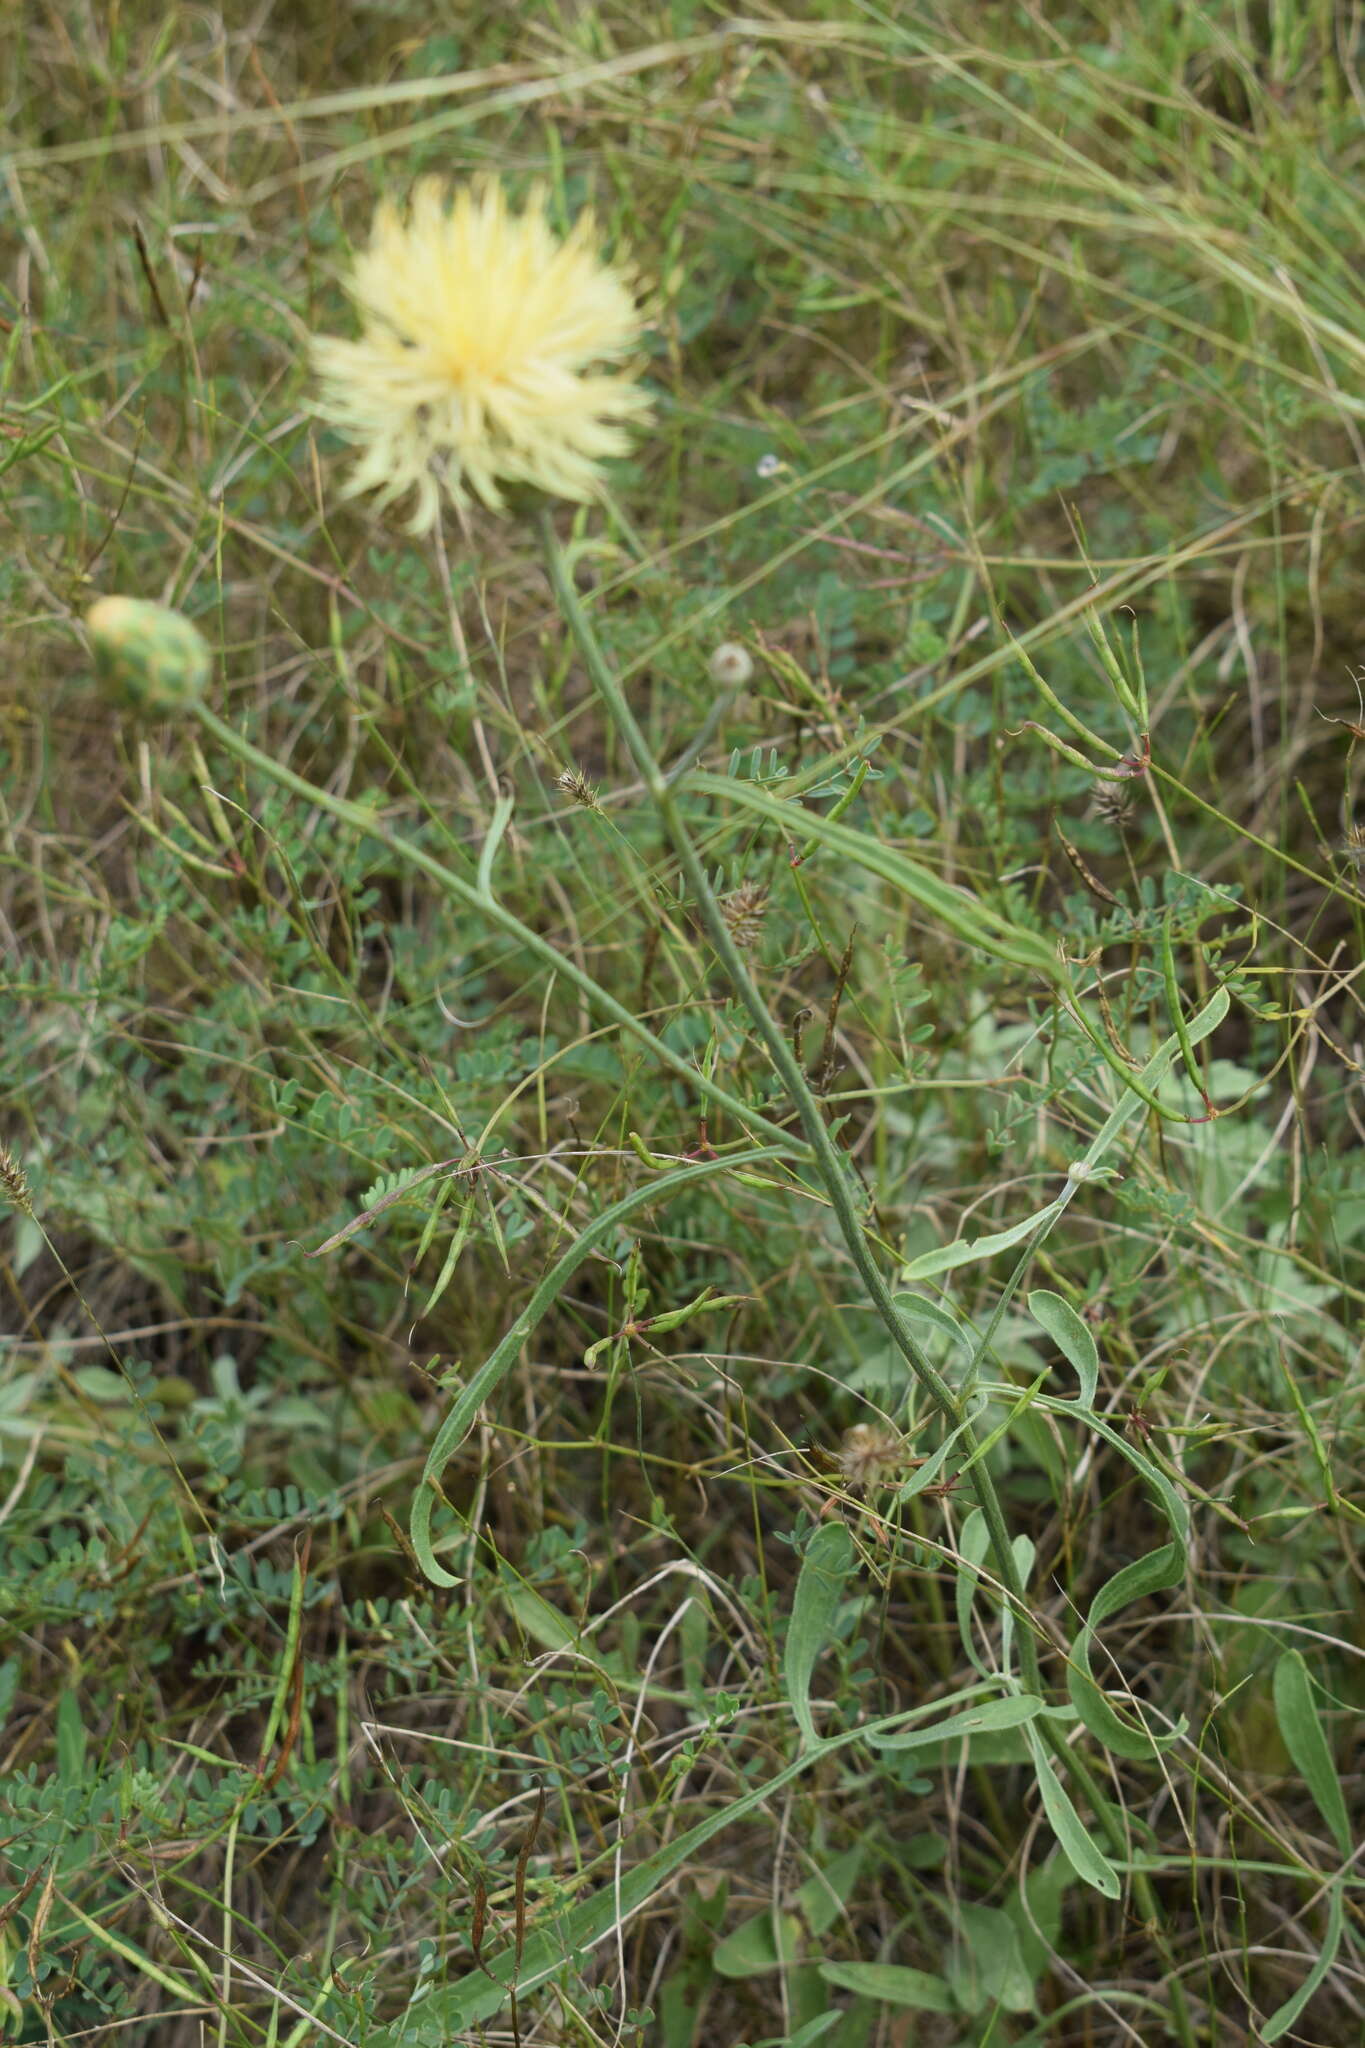 Image of Centaurea salonitana Vis.